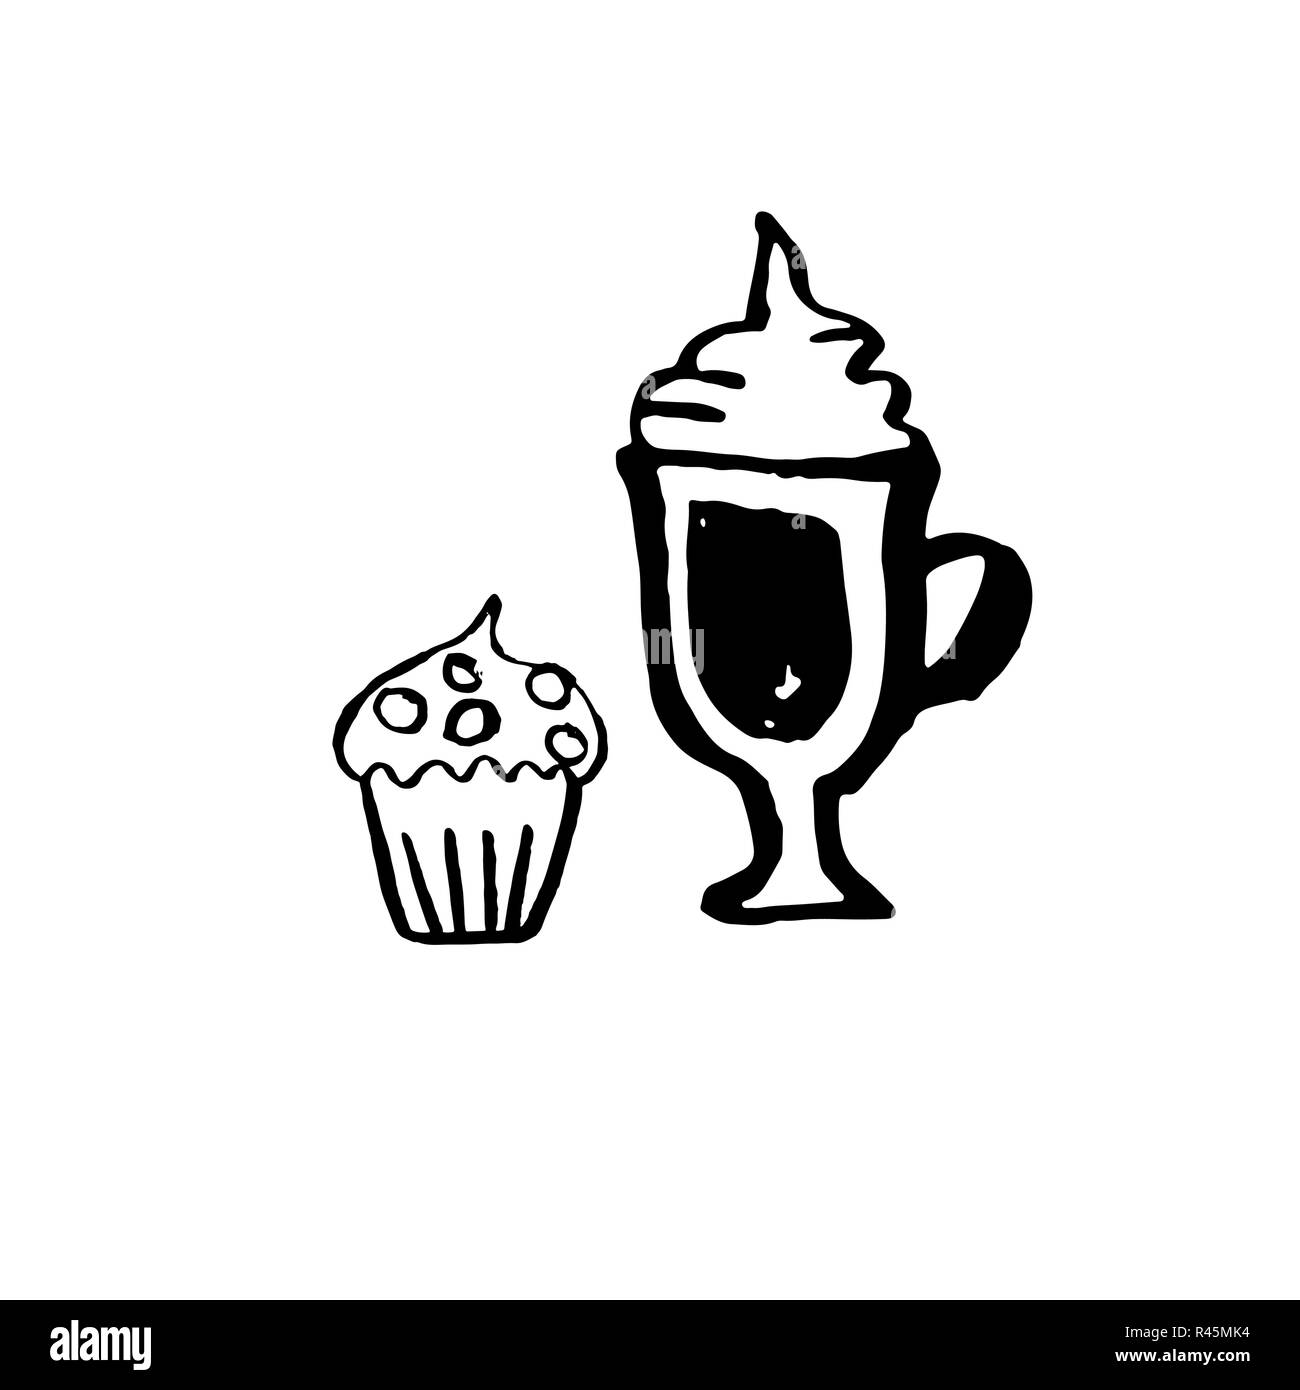 Tazza di caffè e tortina. Illustrazione Vettoriale. Illustrazione Vettoriale